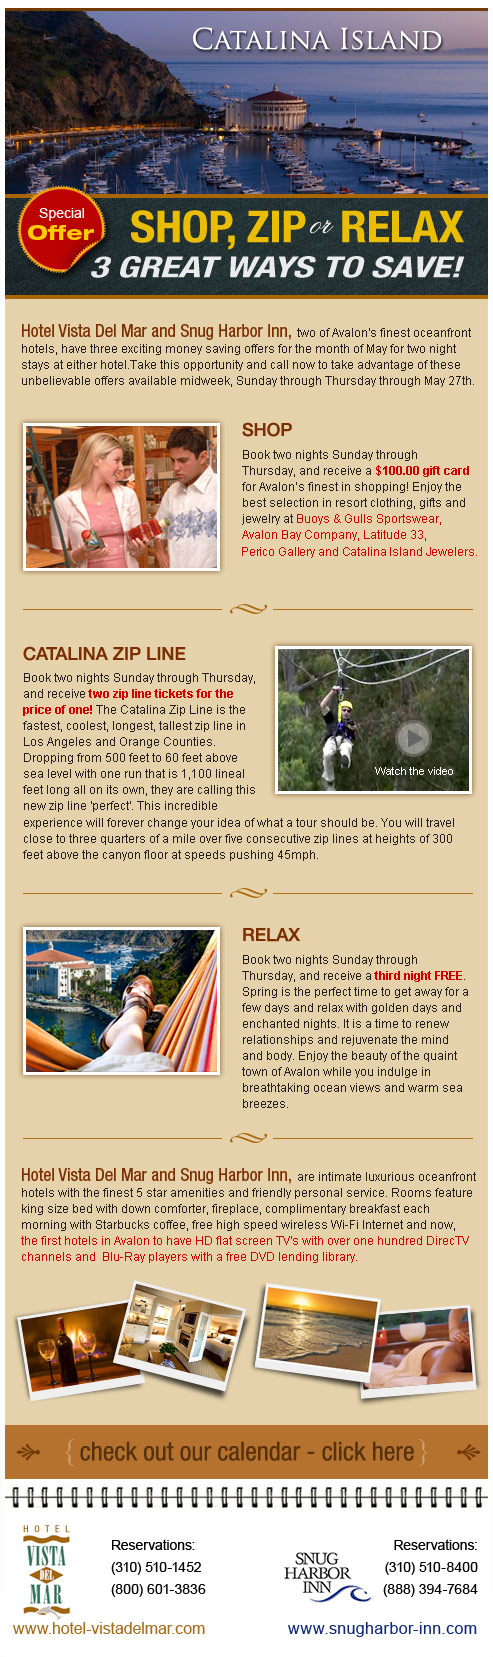 Catalina Islan Hotels - Advertisement Email